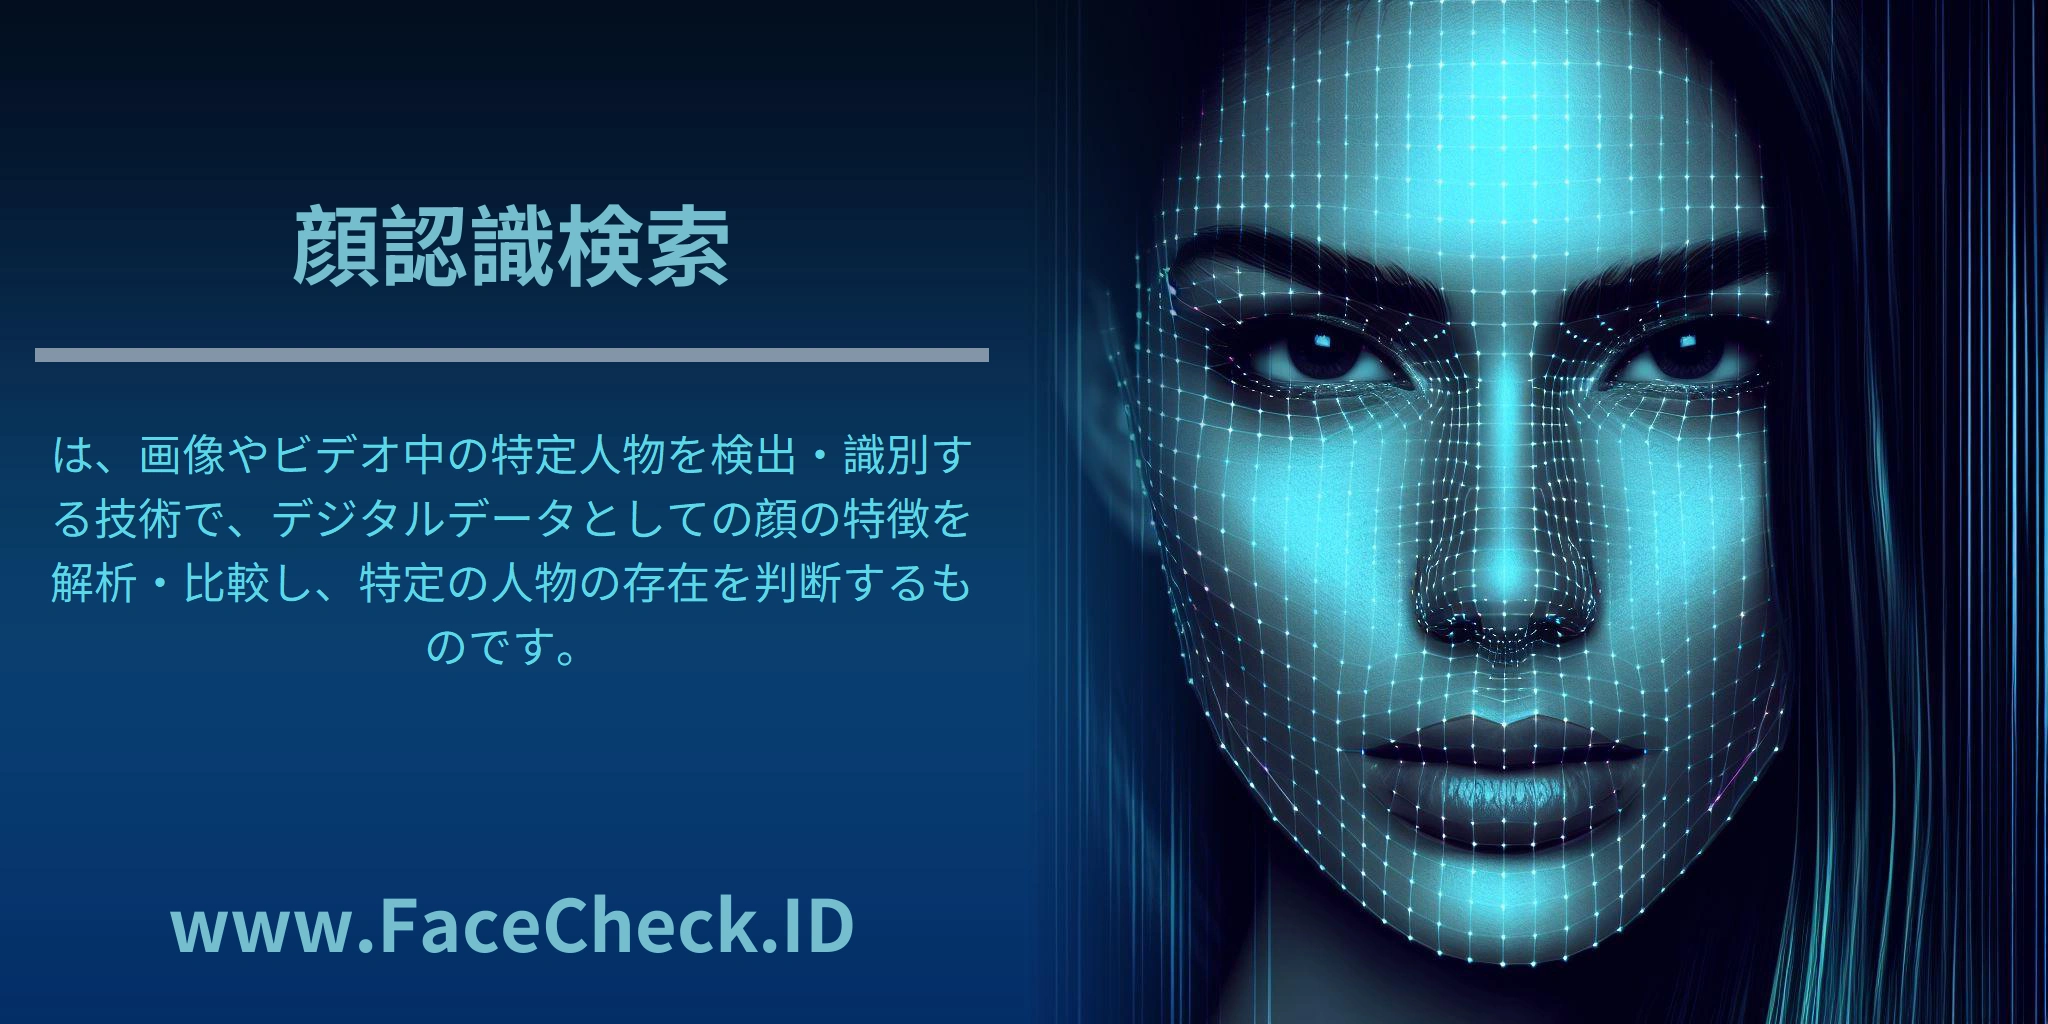 <b>顔認識検索</b>は、画像やビデオ中の特定人物を検出・識別する技術で、デジタルデータとしての顔の特徴を解析・比較し、特定の人物の存在を判断するものです。